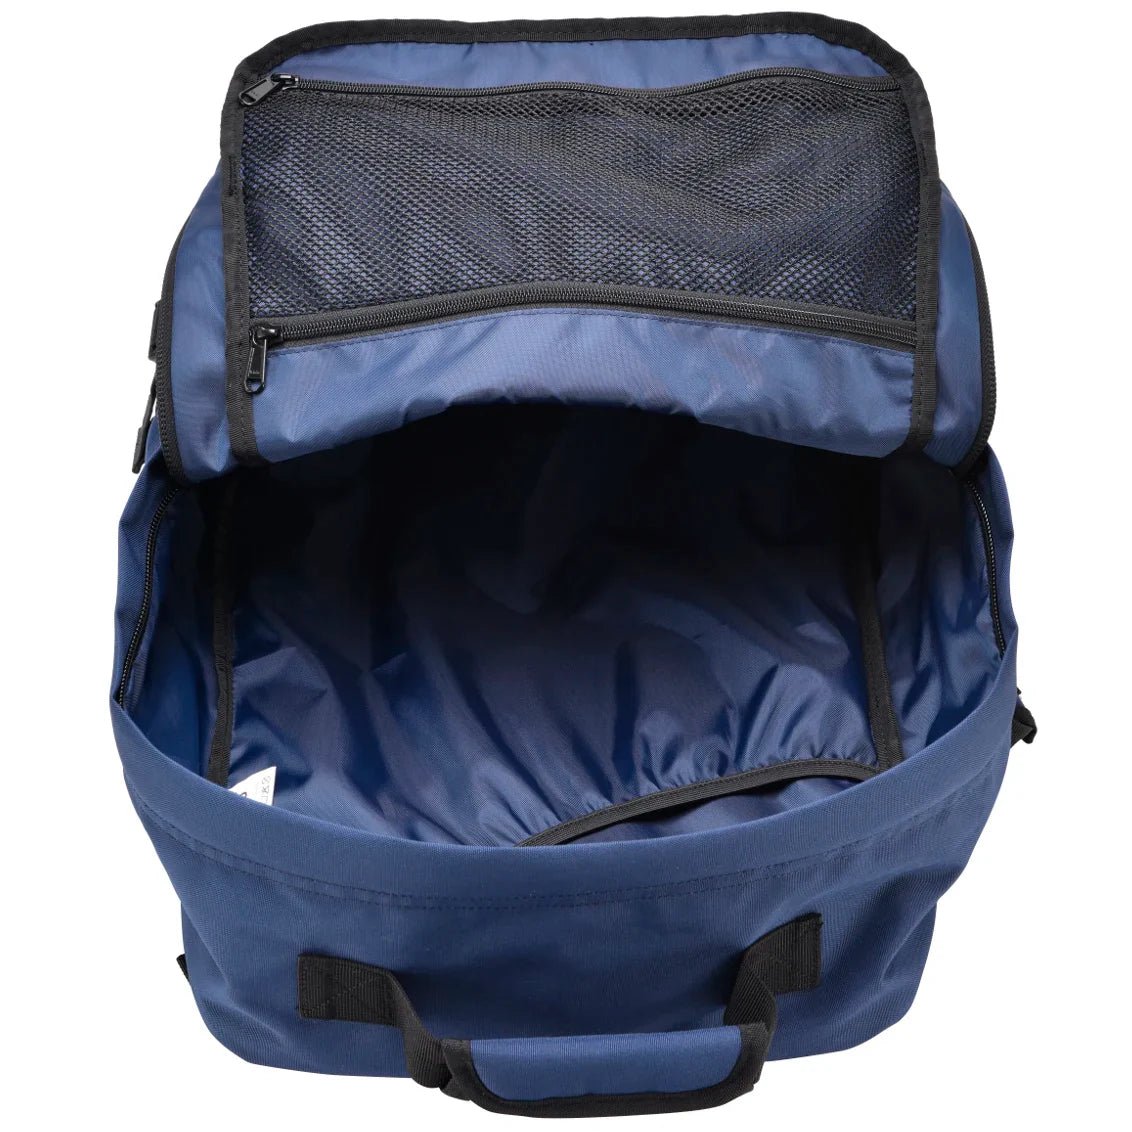 CabinZero Cabin Backpacks Classic 36L Rucksack 45 cm - aruba blue